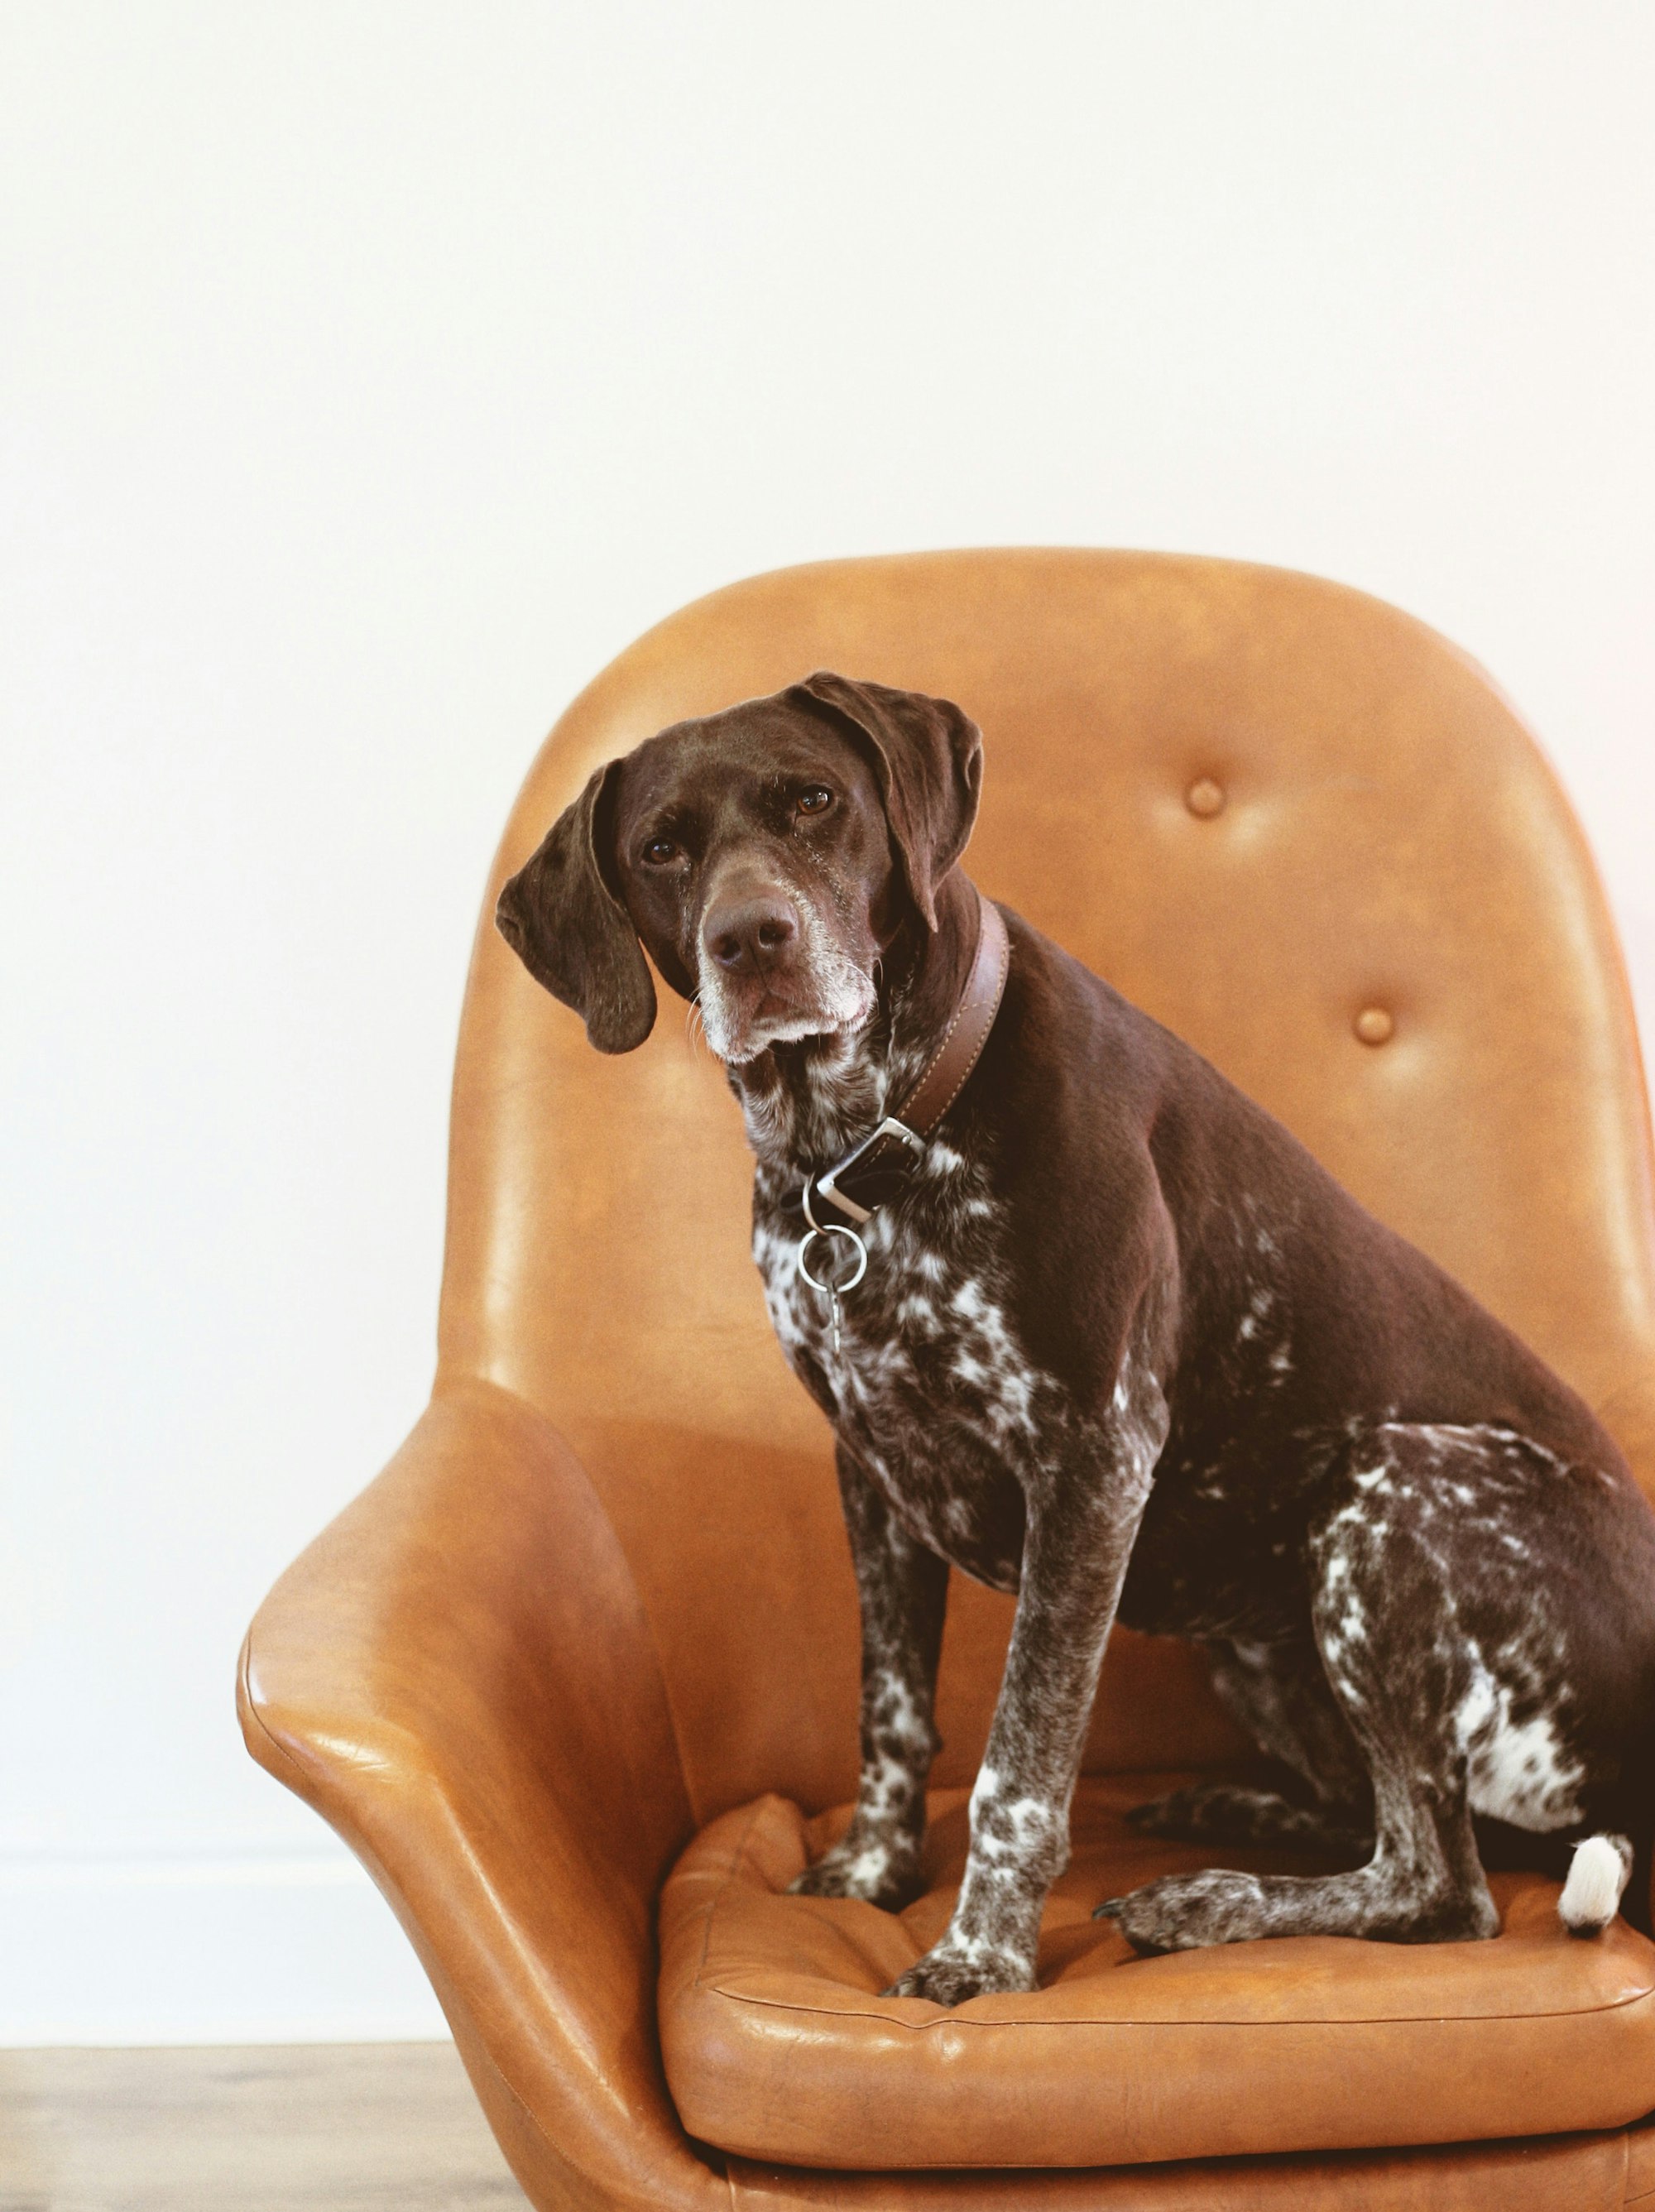 short-coated black and white dog having collar on orange leather armchair